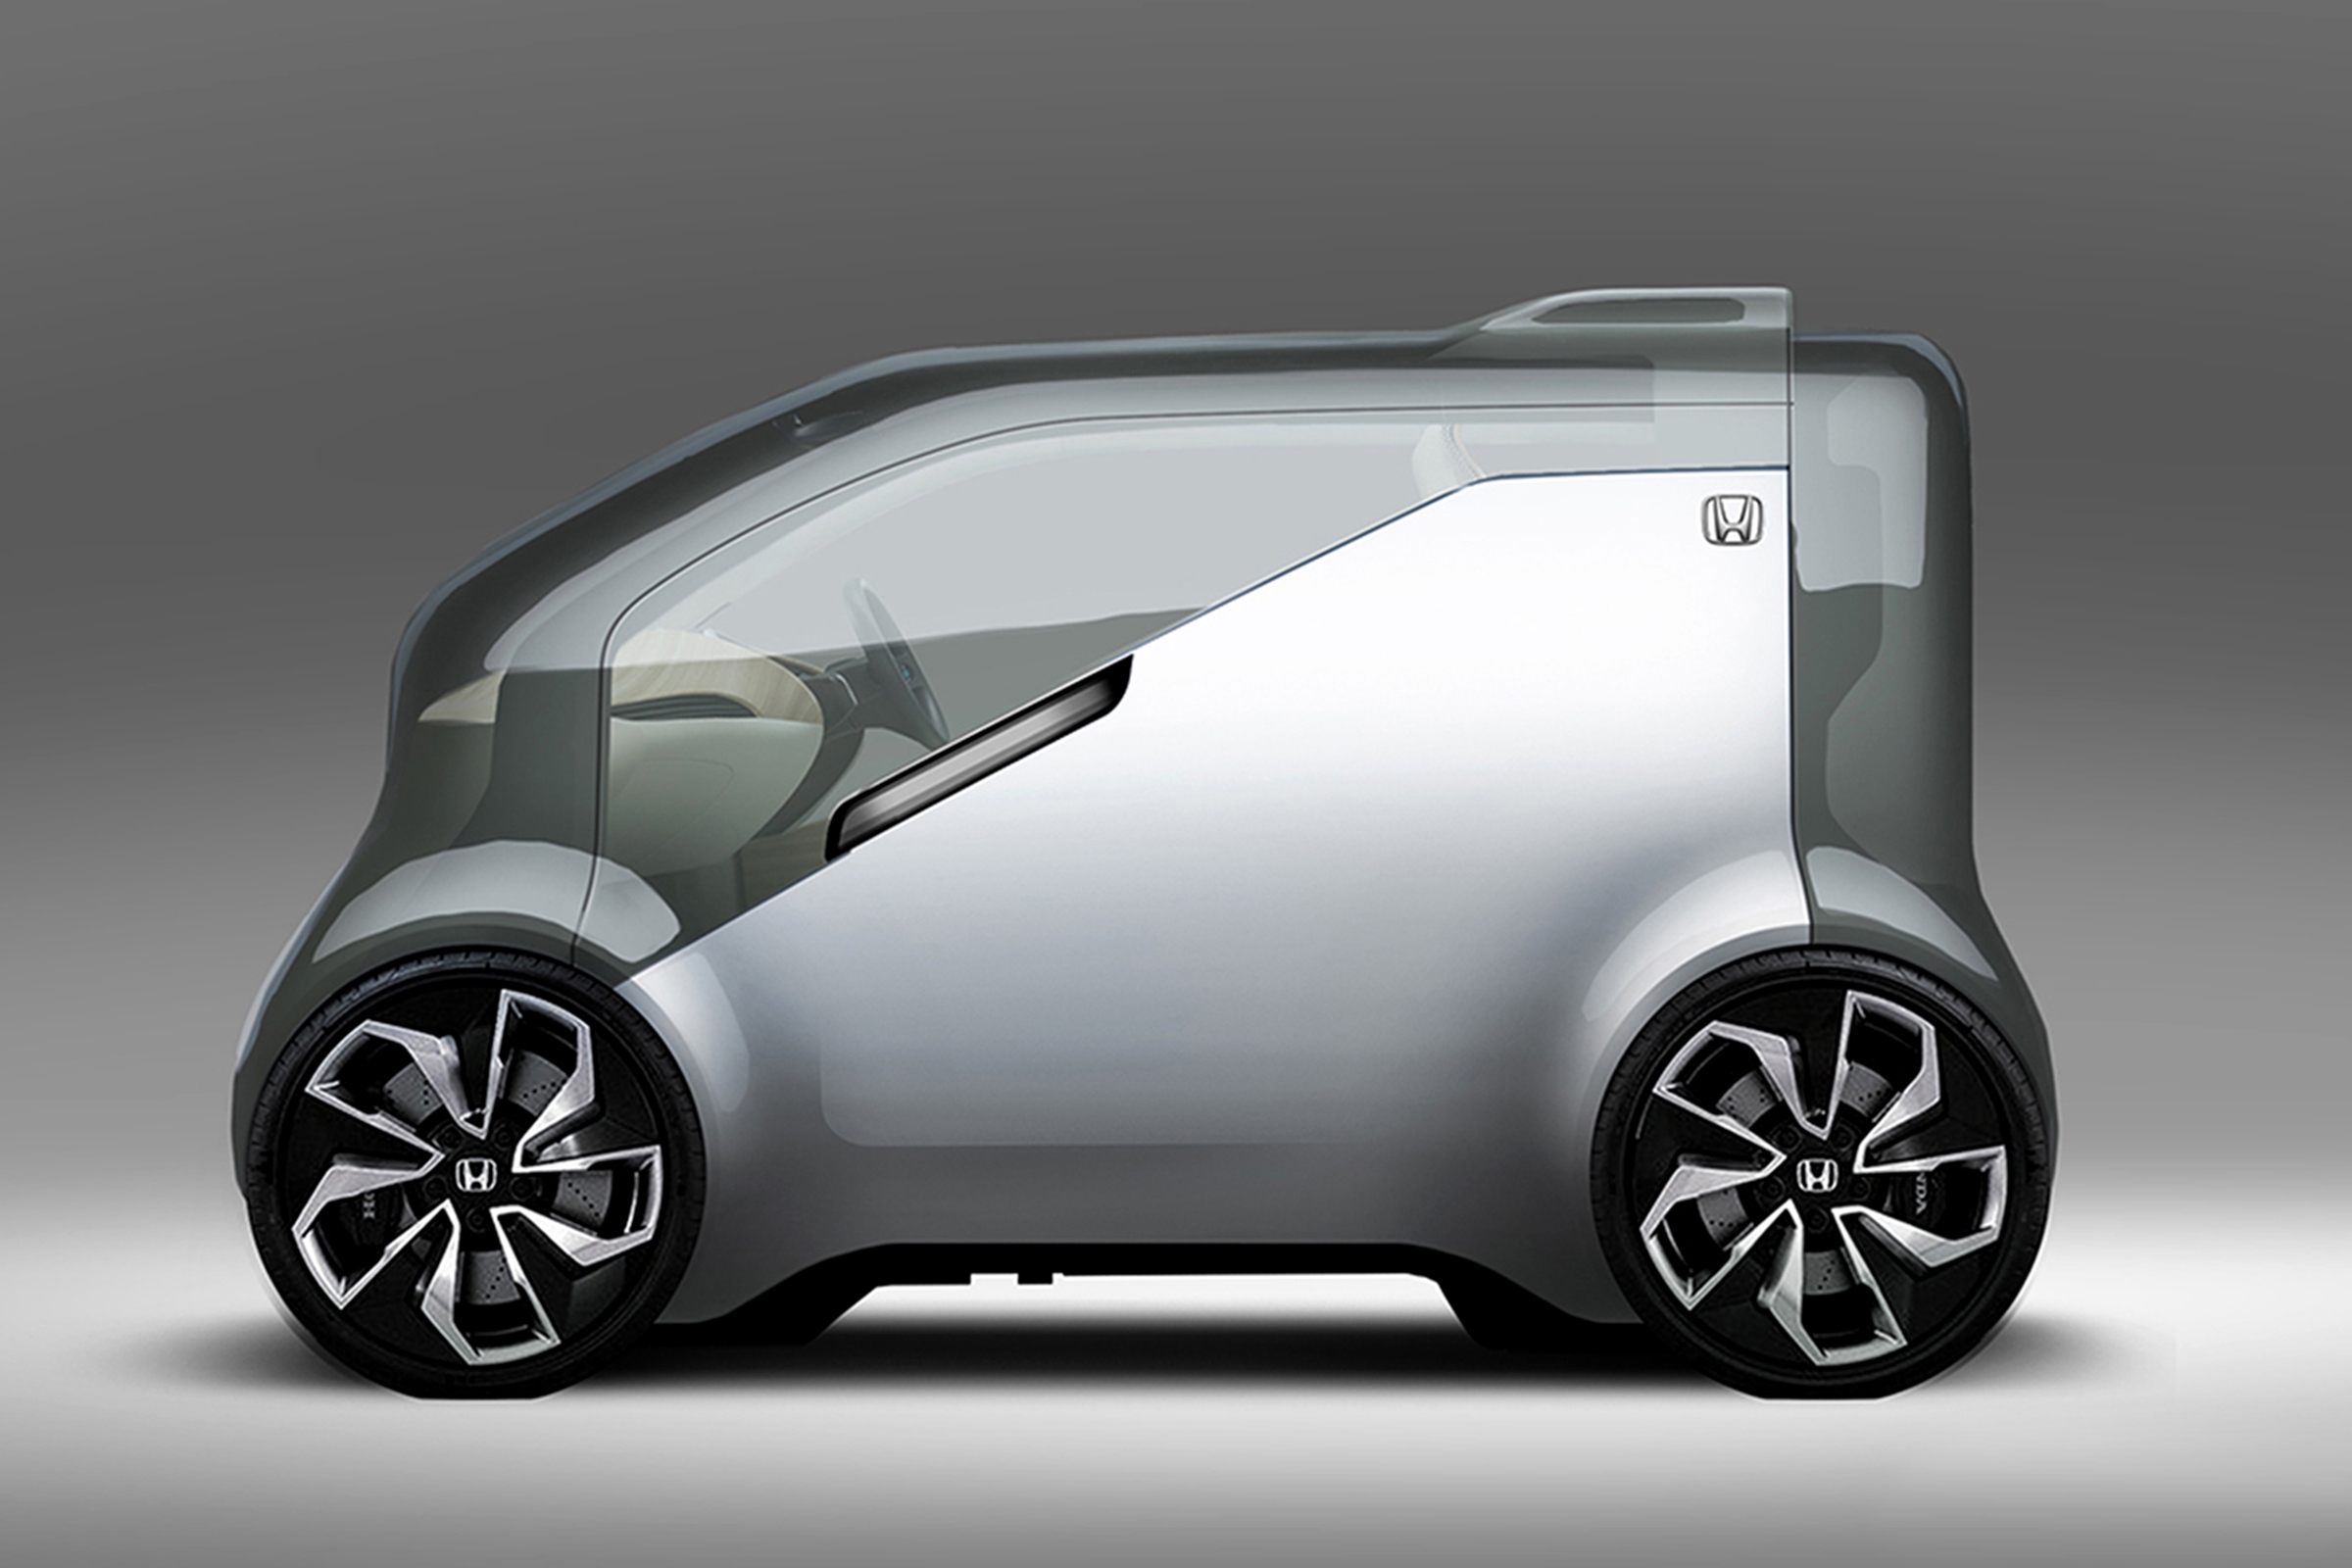 Honda to showcase NeuV autonomous, electric vehicle at CES 2017